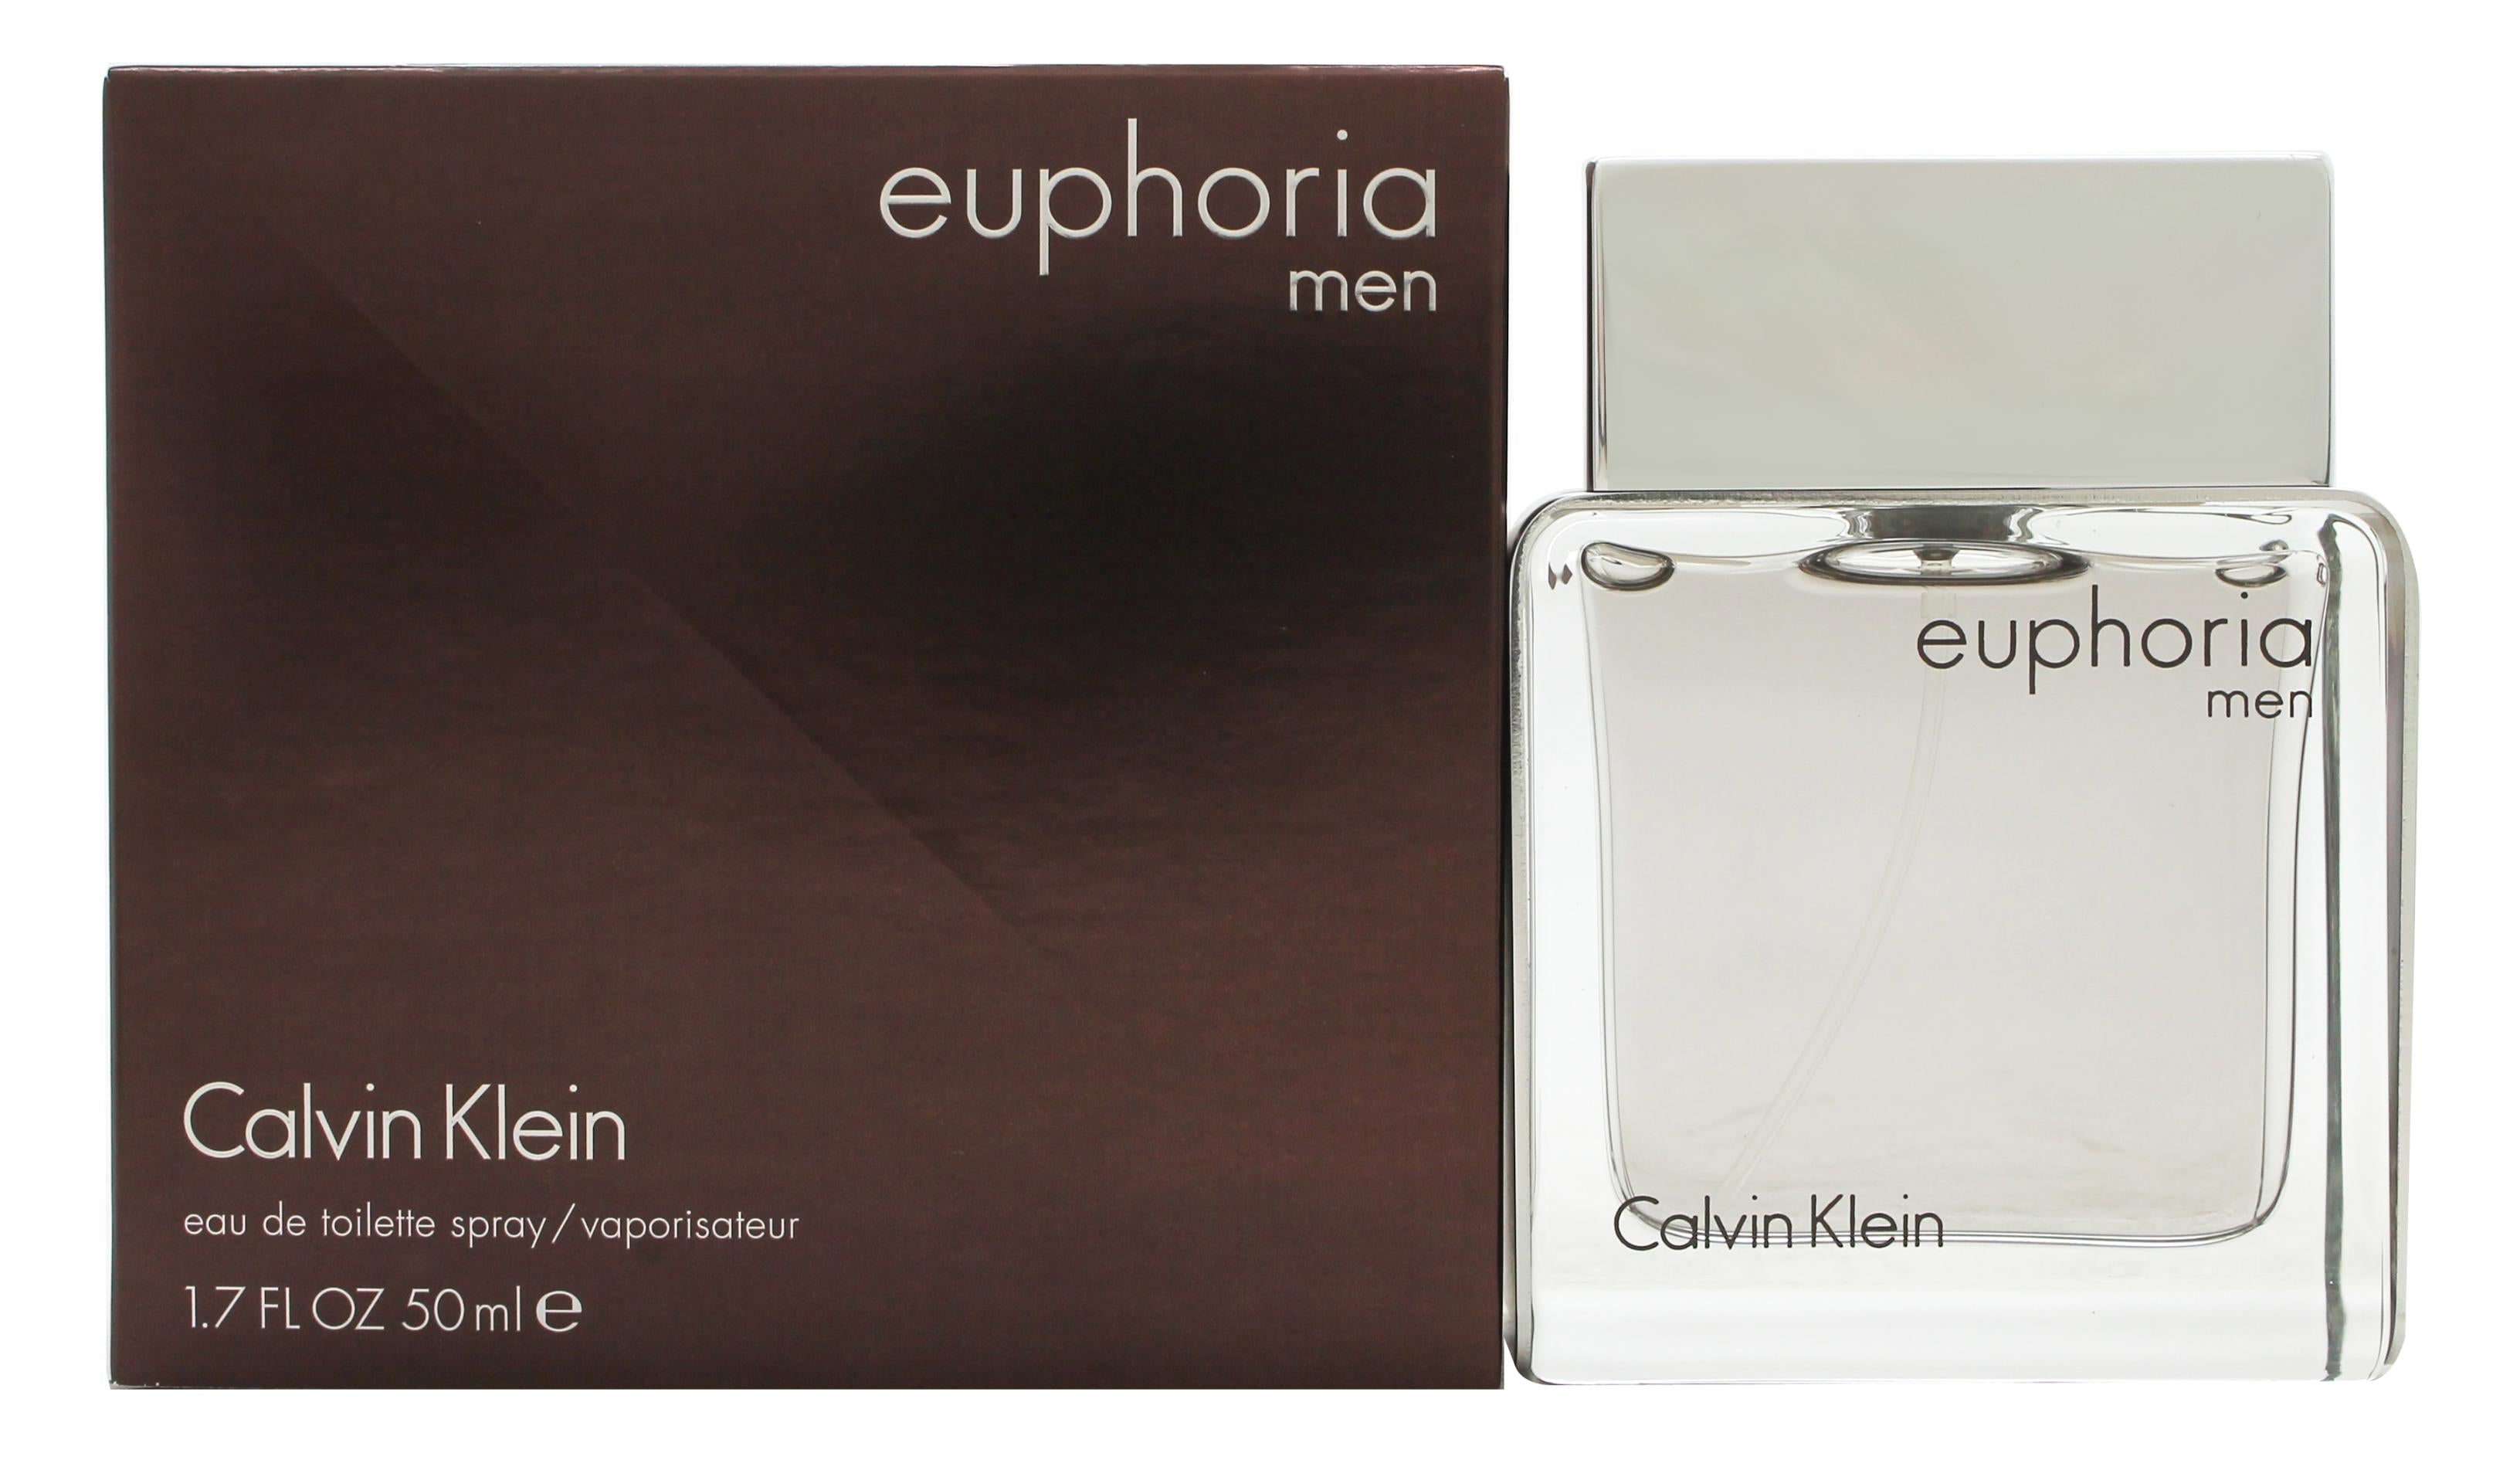 View Calvin Klein Euphoria Eau de Toilette 50ml Spray information